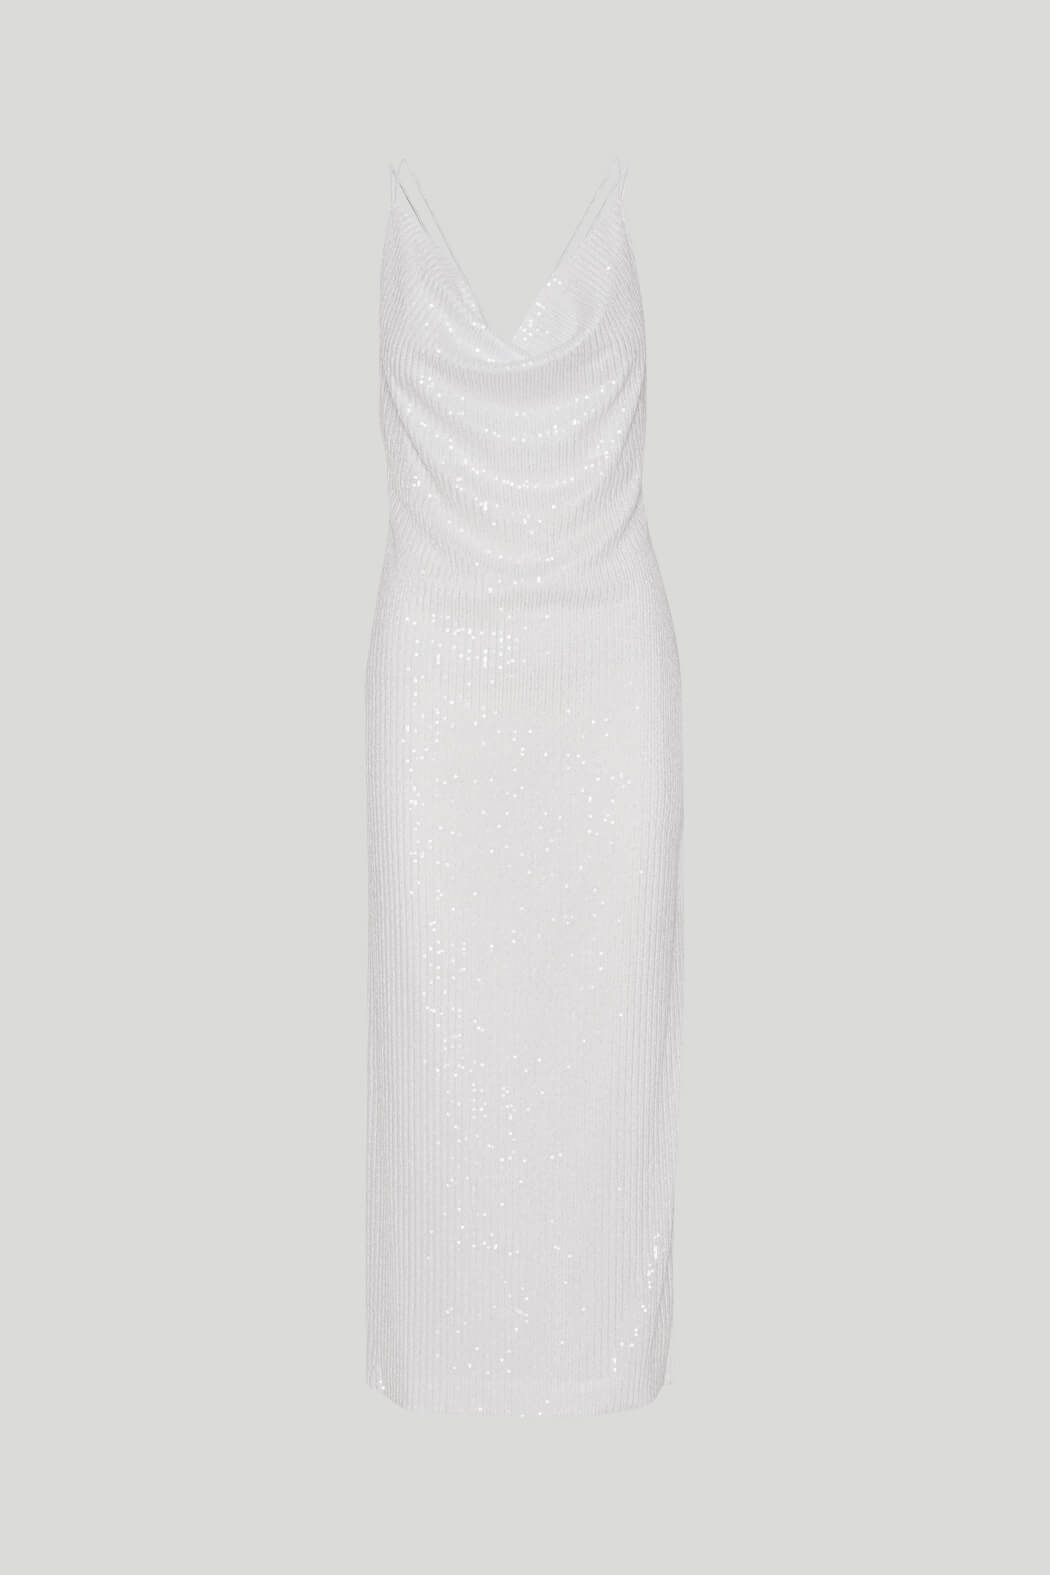 ROTATE Briger Christensen Sequin Slip Dress in Bright White